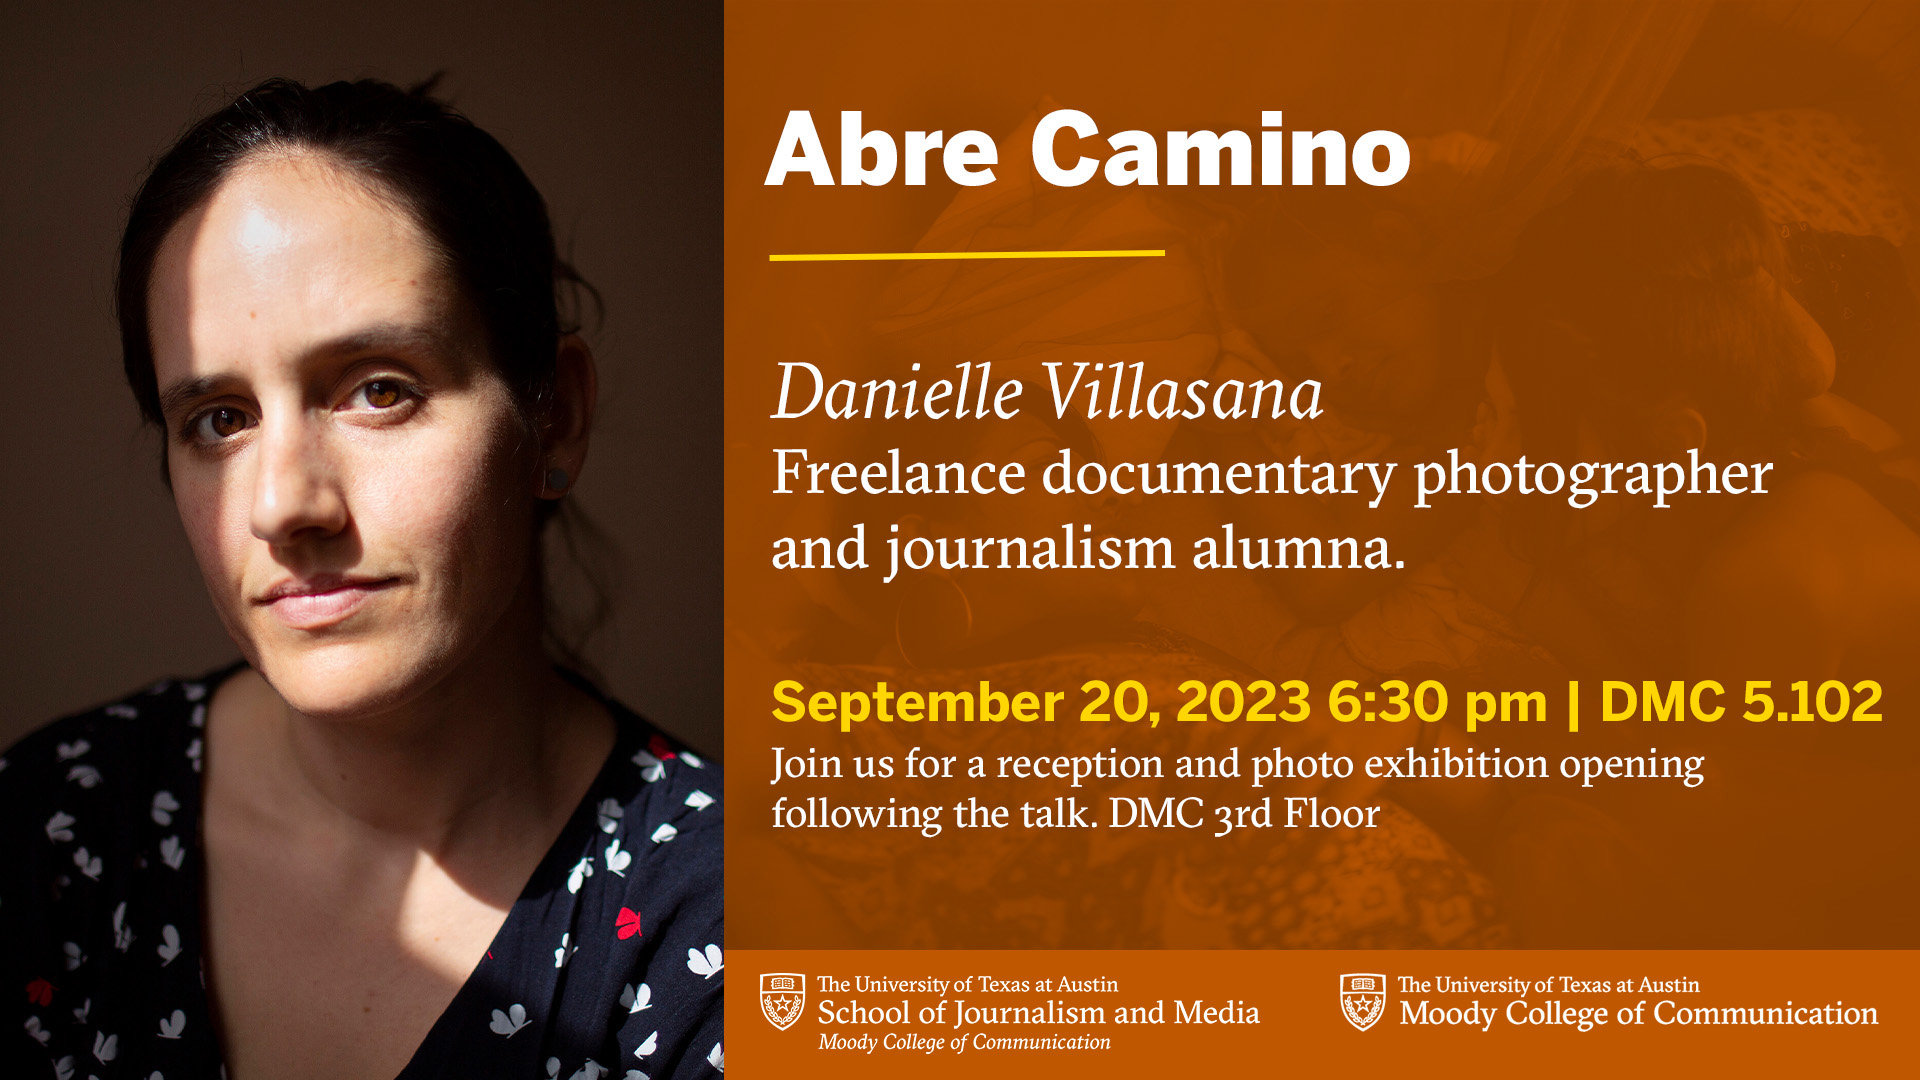 Portrait of guest lecturer Danielle Villasana and details for her talk.